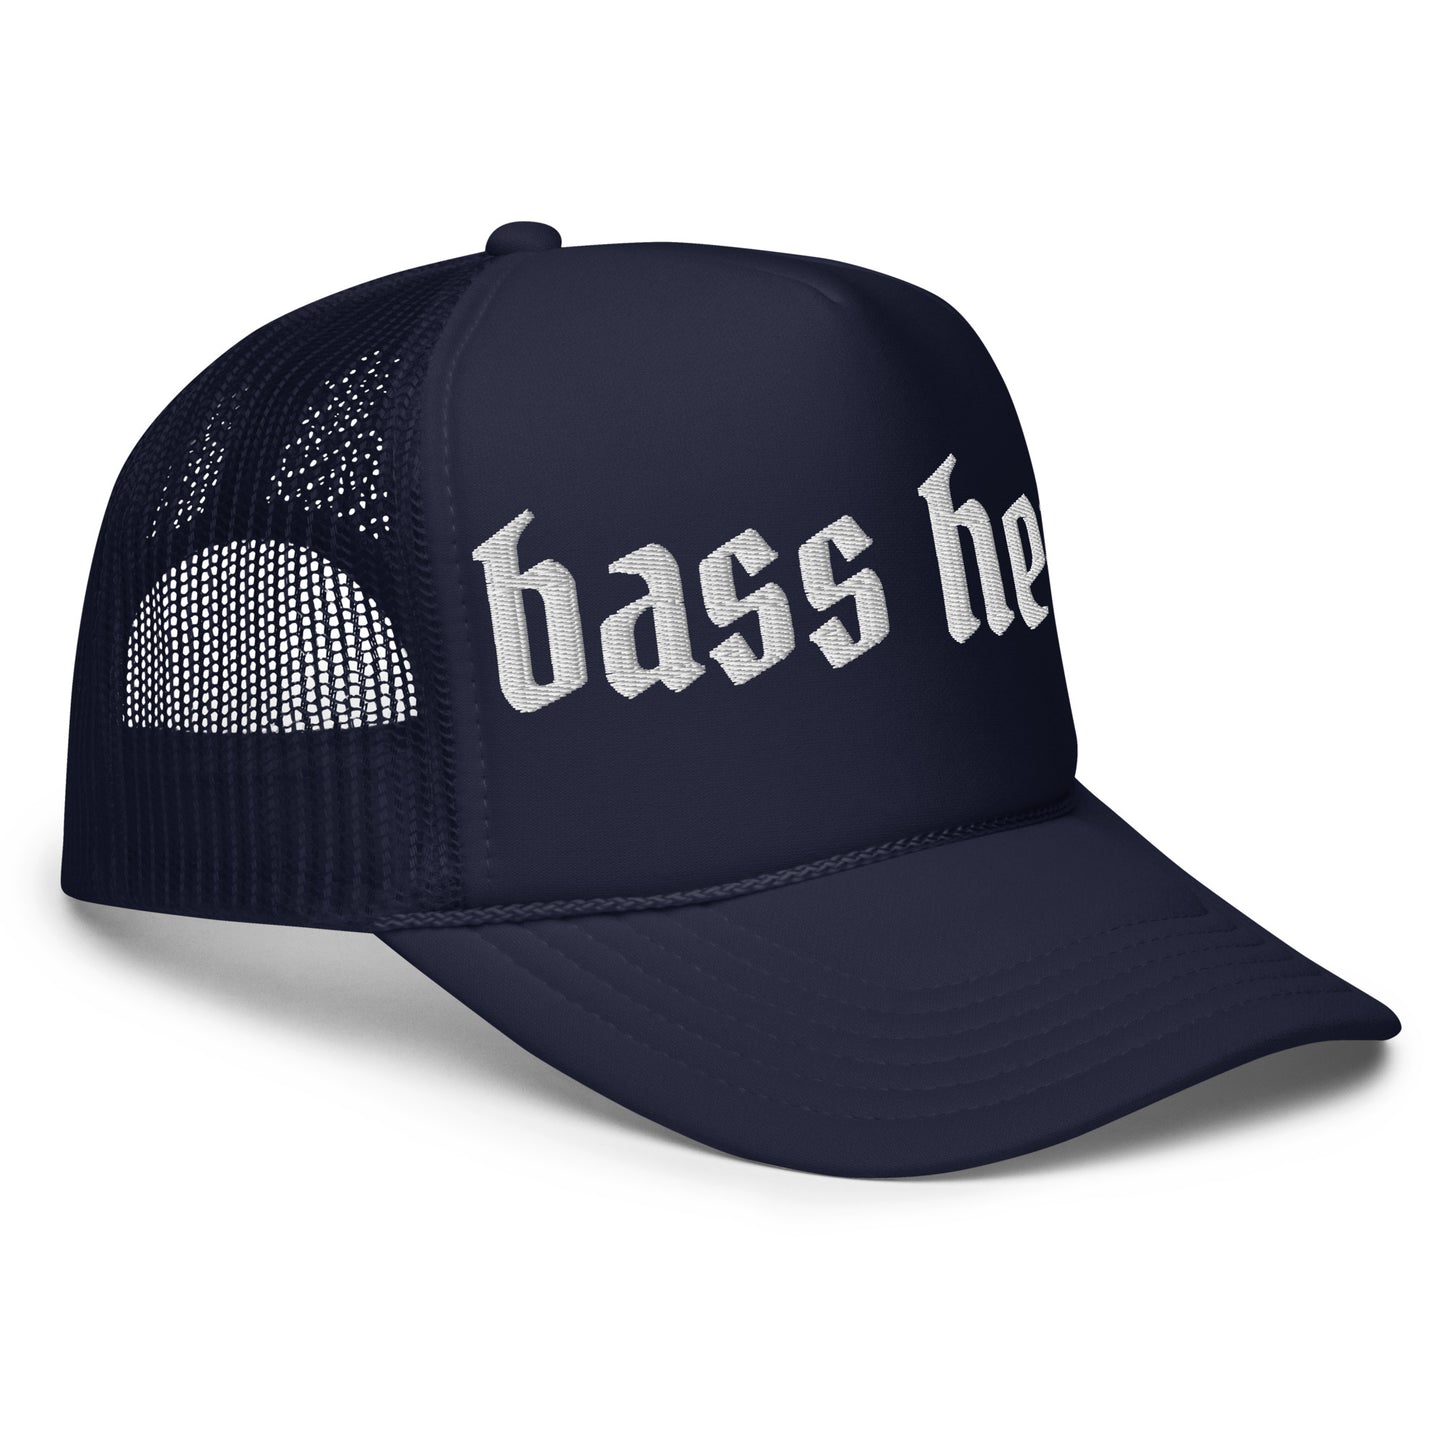 Bass Head Embroidered Unisex Foam trucker hat